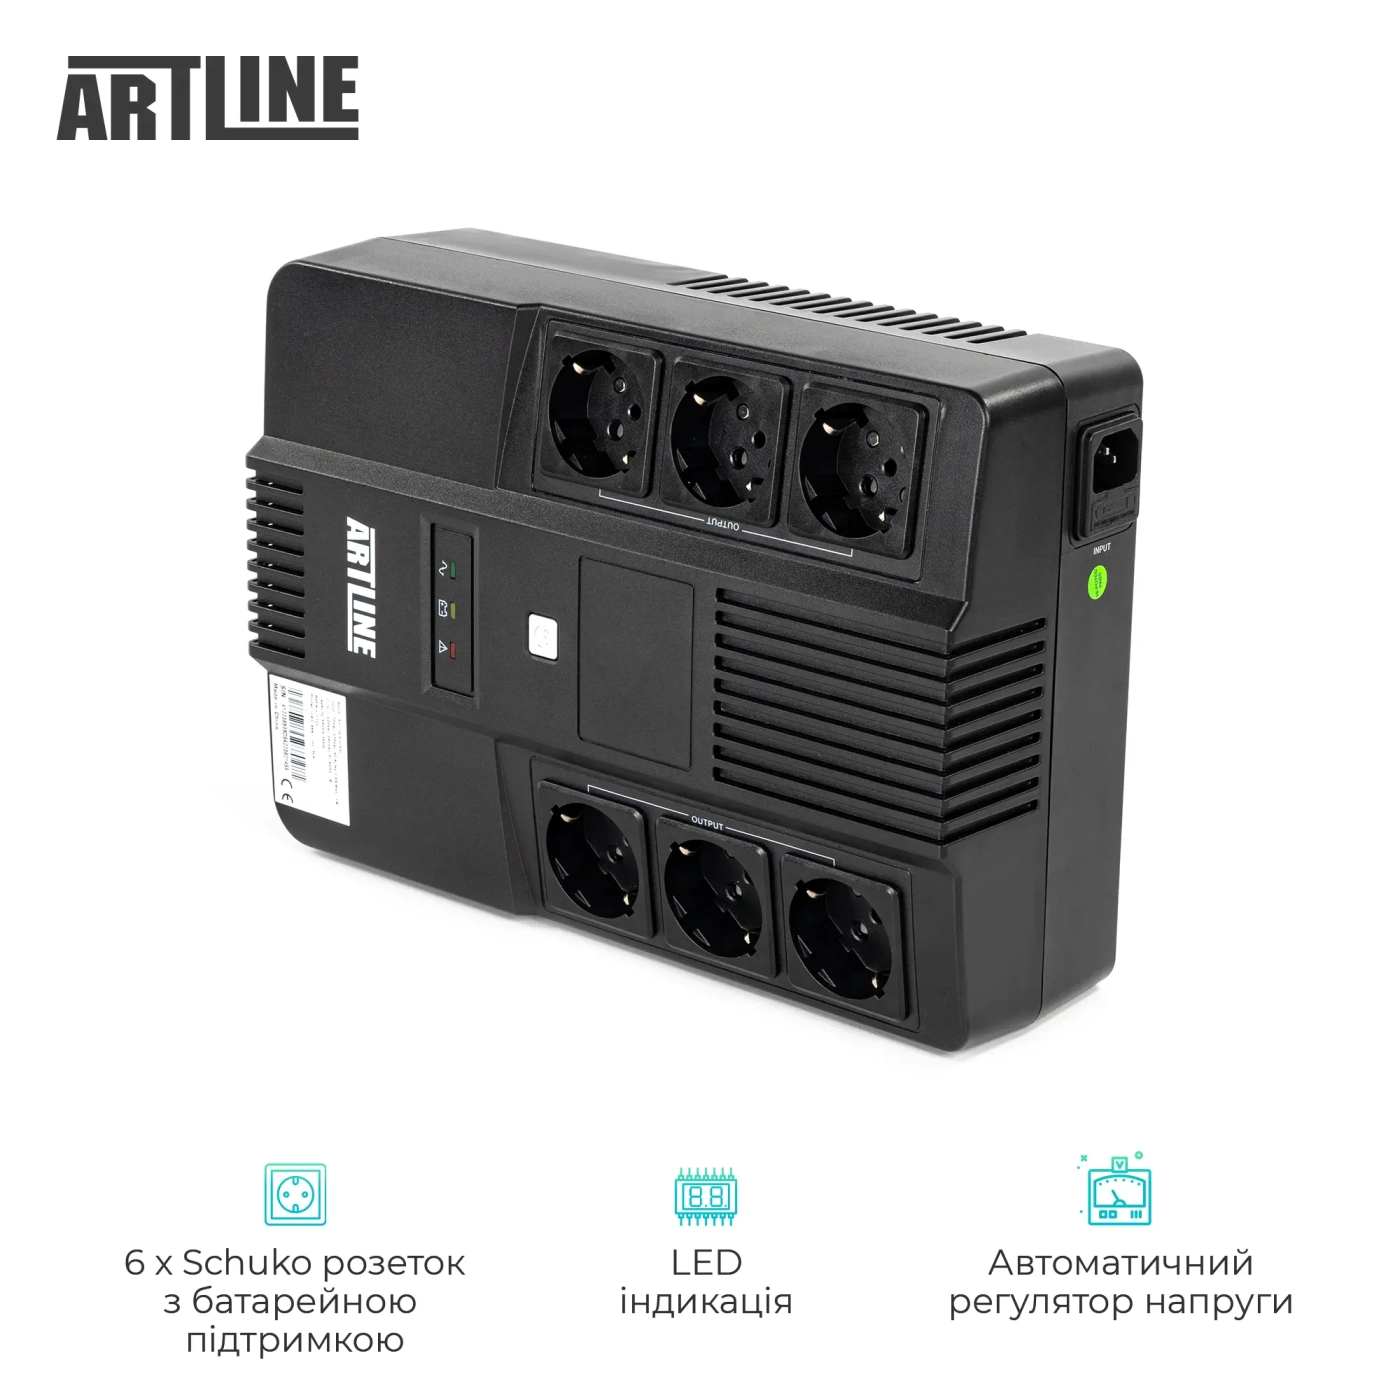 Купить ИБП (UPS) линейно-интерактивный Artline AIO 650, 650VA/360W, LED, 6 x Schuko - фото 3